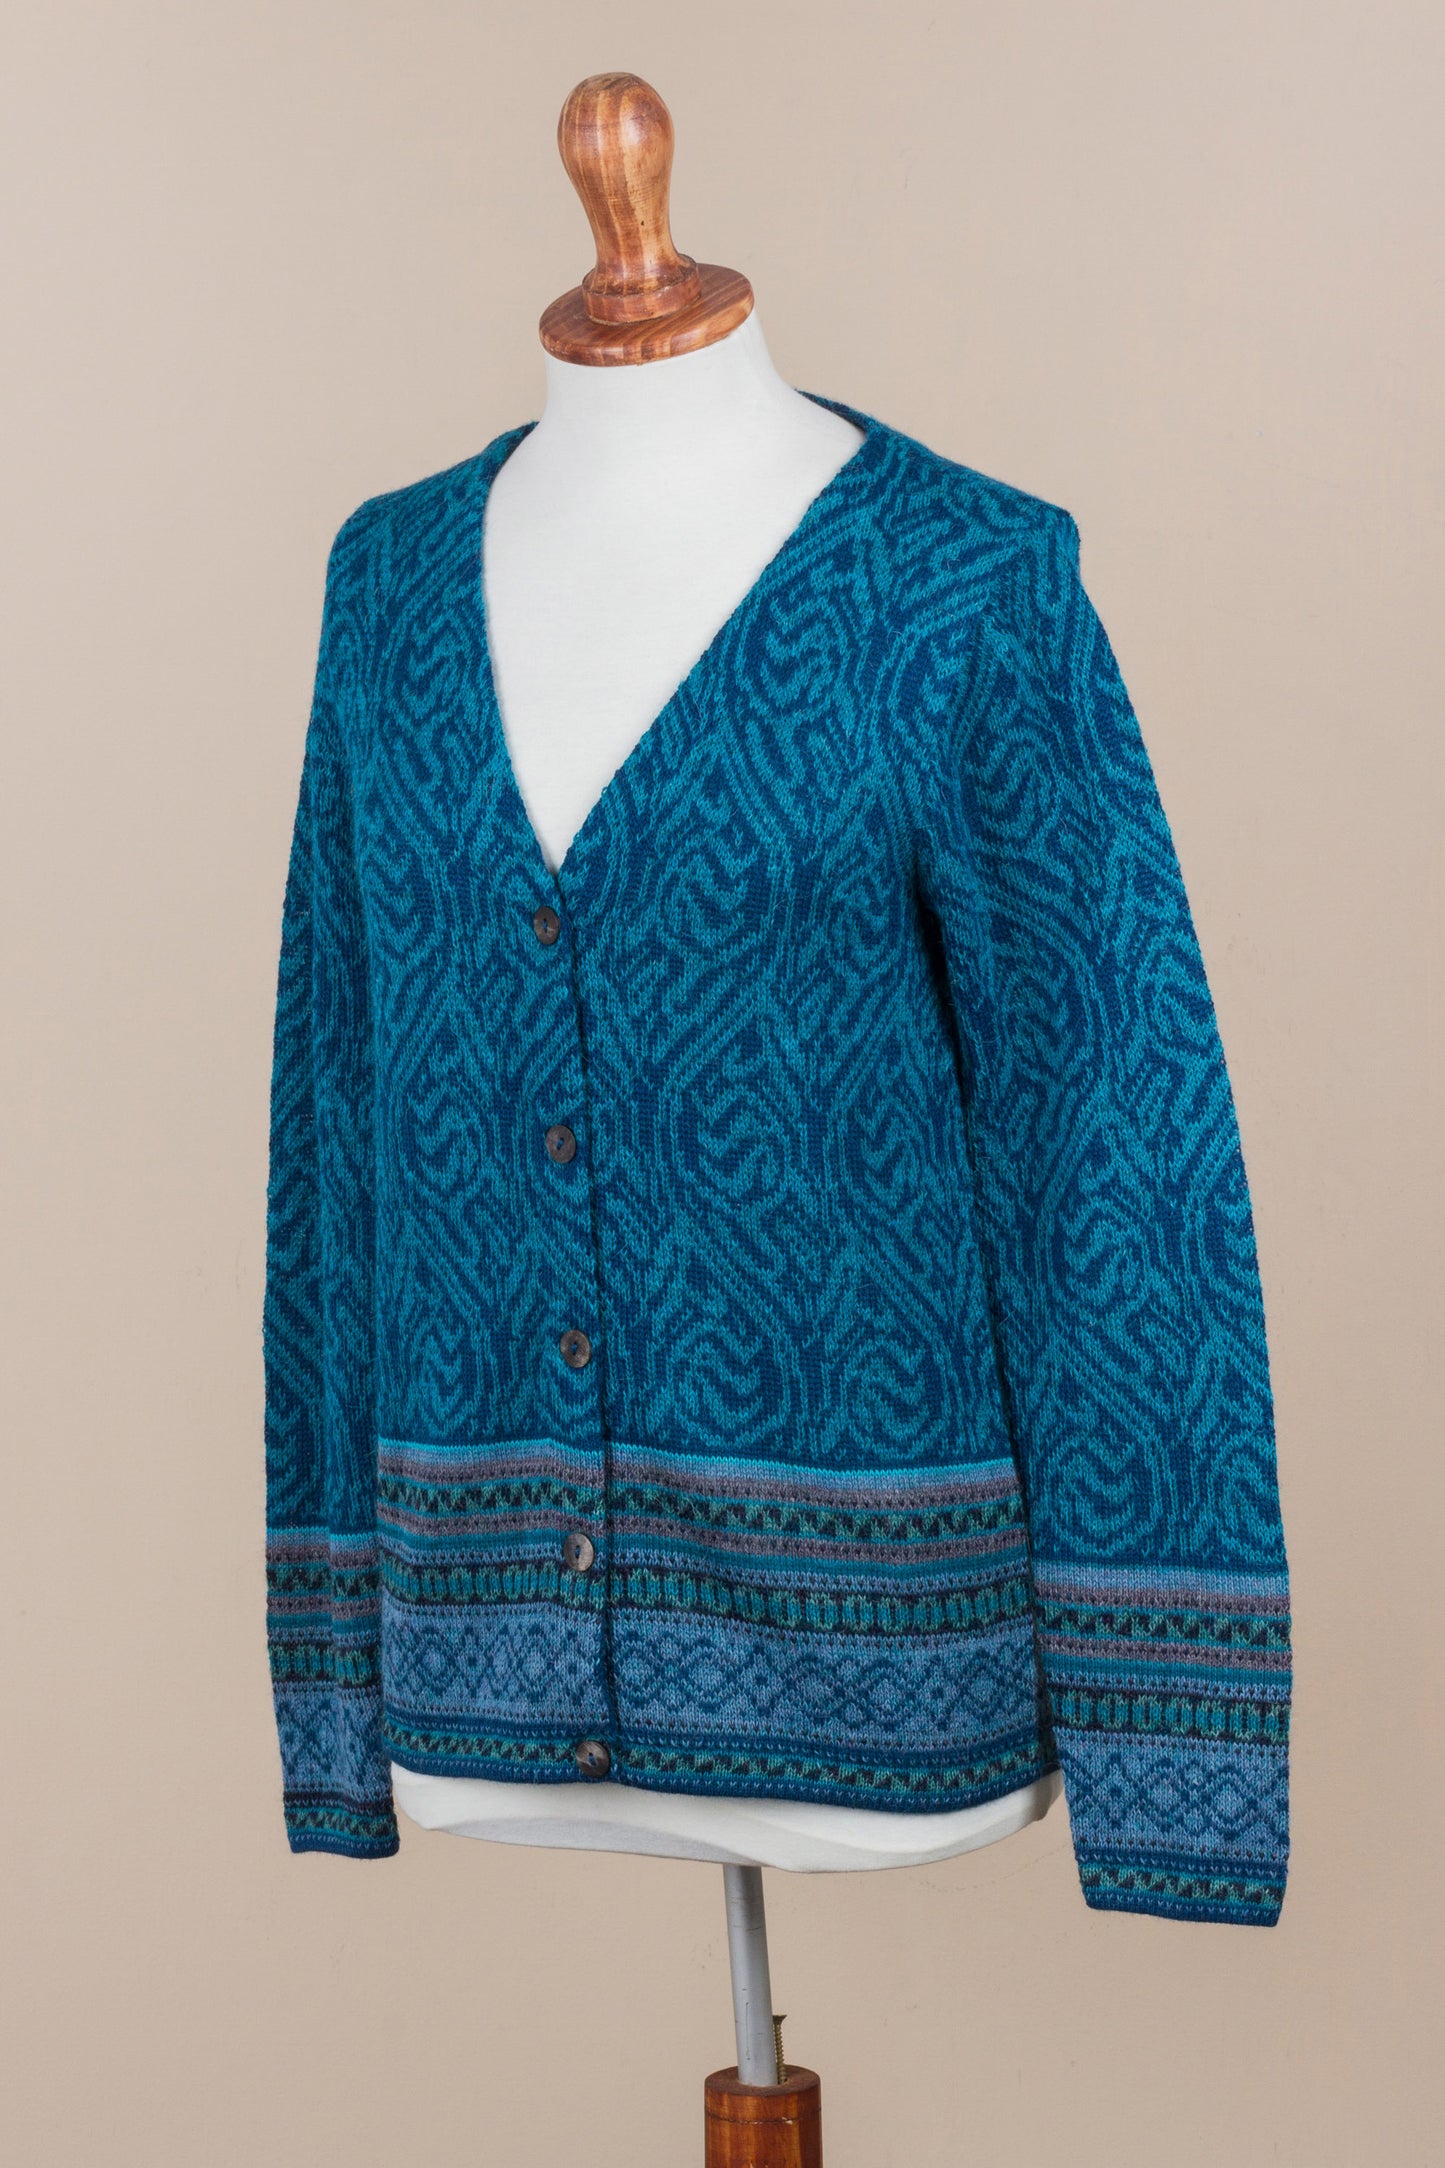 Dreamy Blues Teal 100% Alpaca Wool Cardigan Sweater from Peru